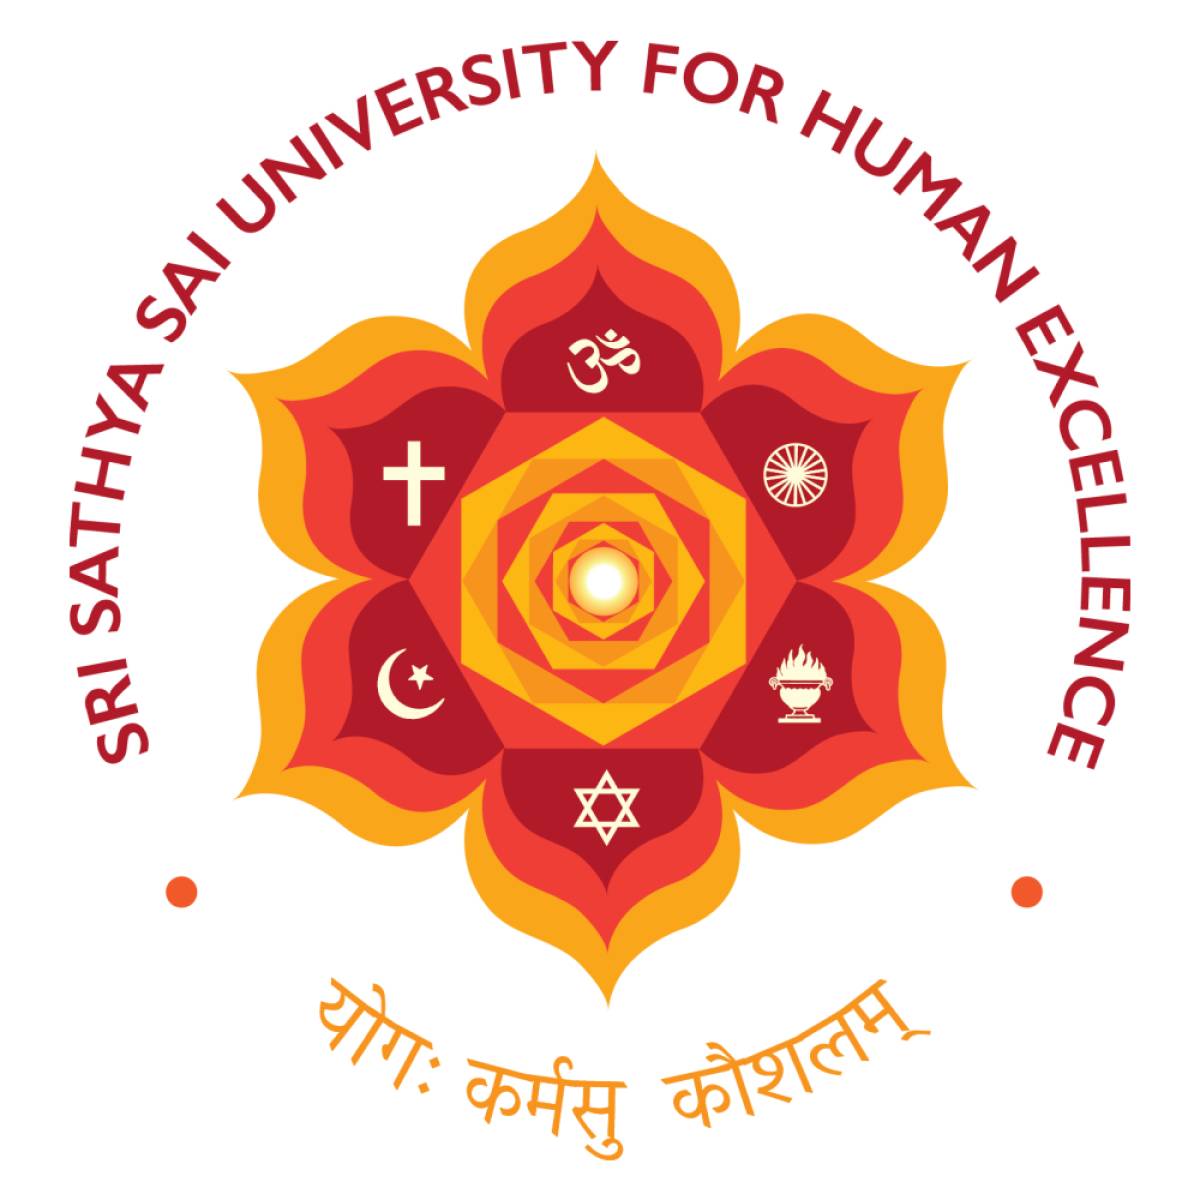 Sri Sathya Sai University for Human Excellence | Home